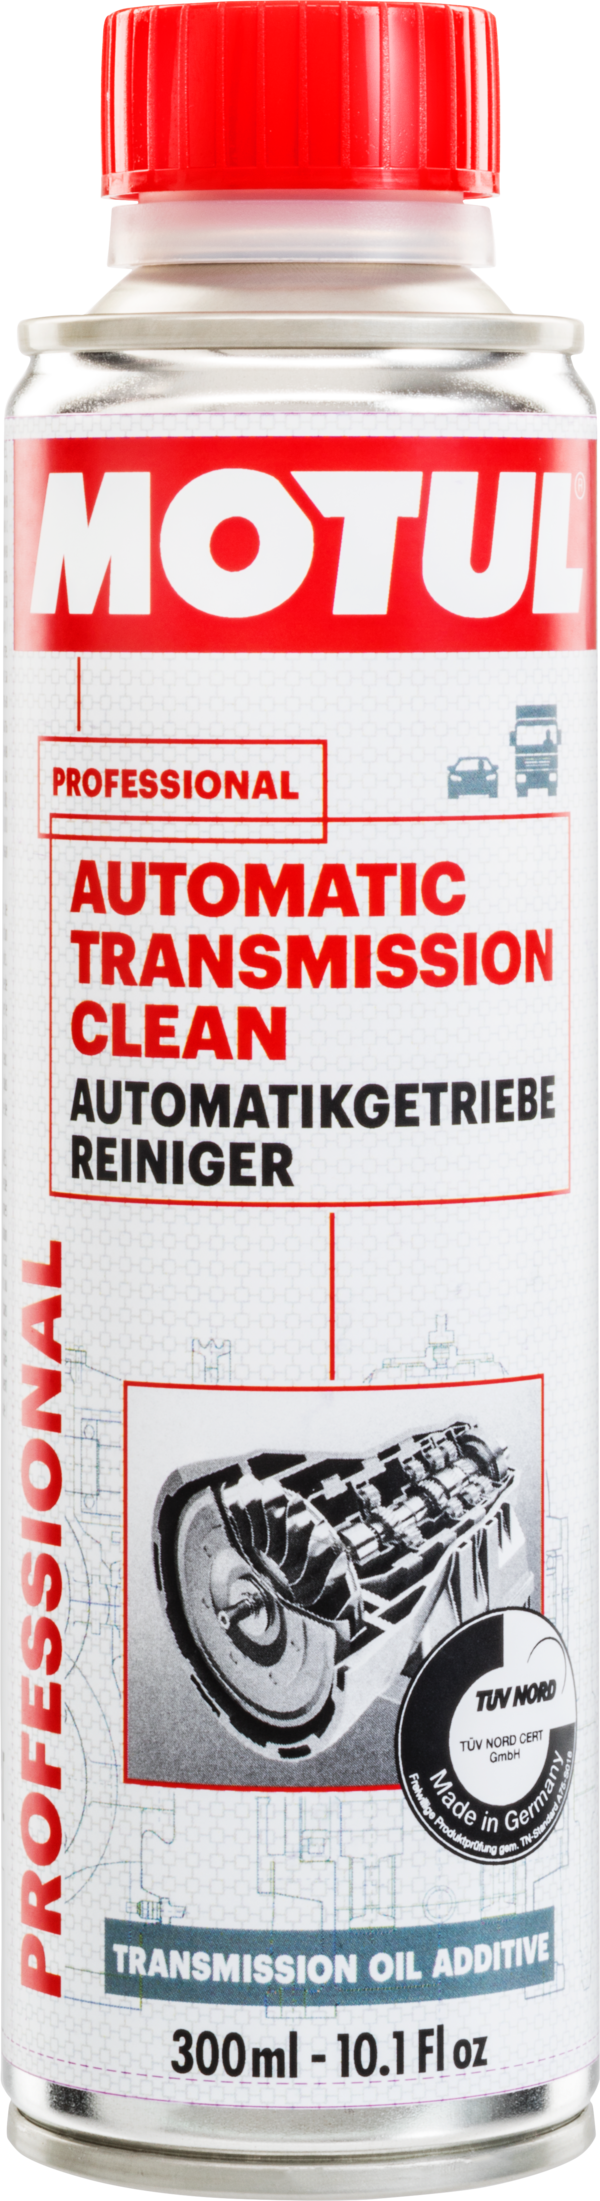 Очиститель АКПП - MOTUL AUTOMATIC TRANSMISSION CLEAN, 300мл / 108127